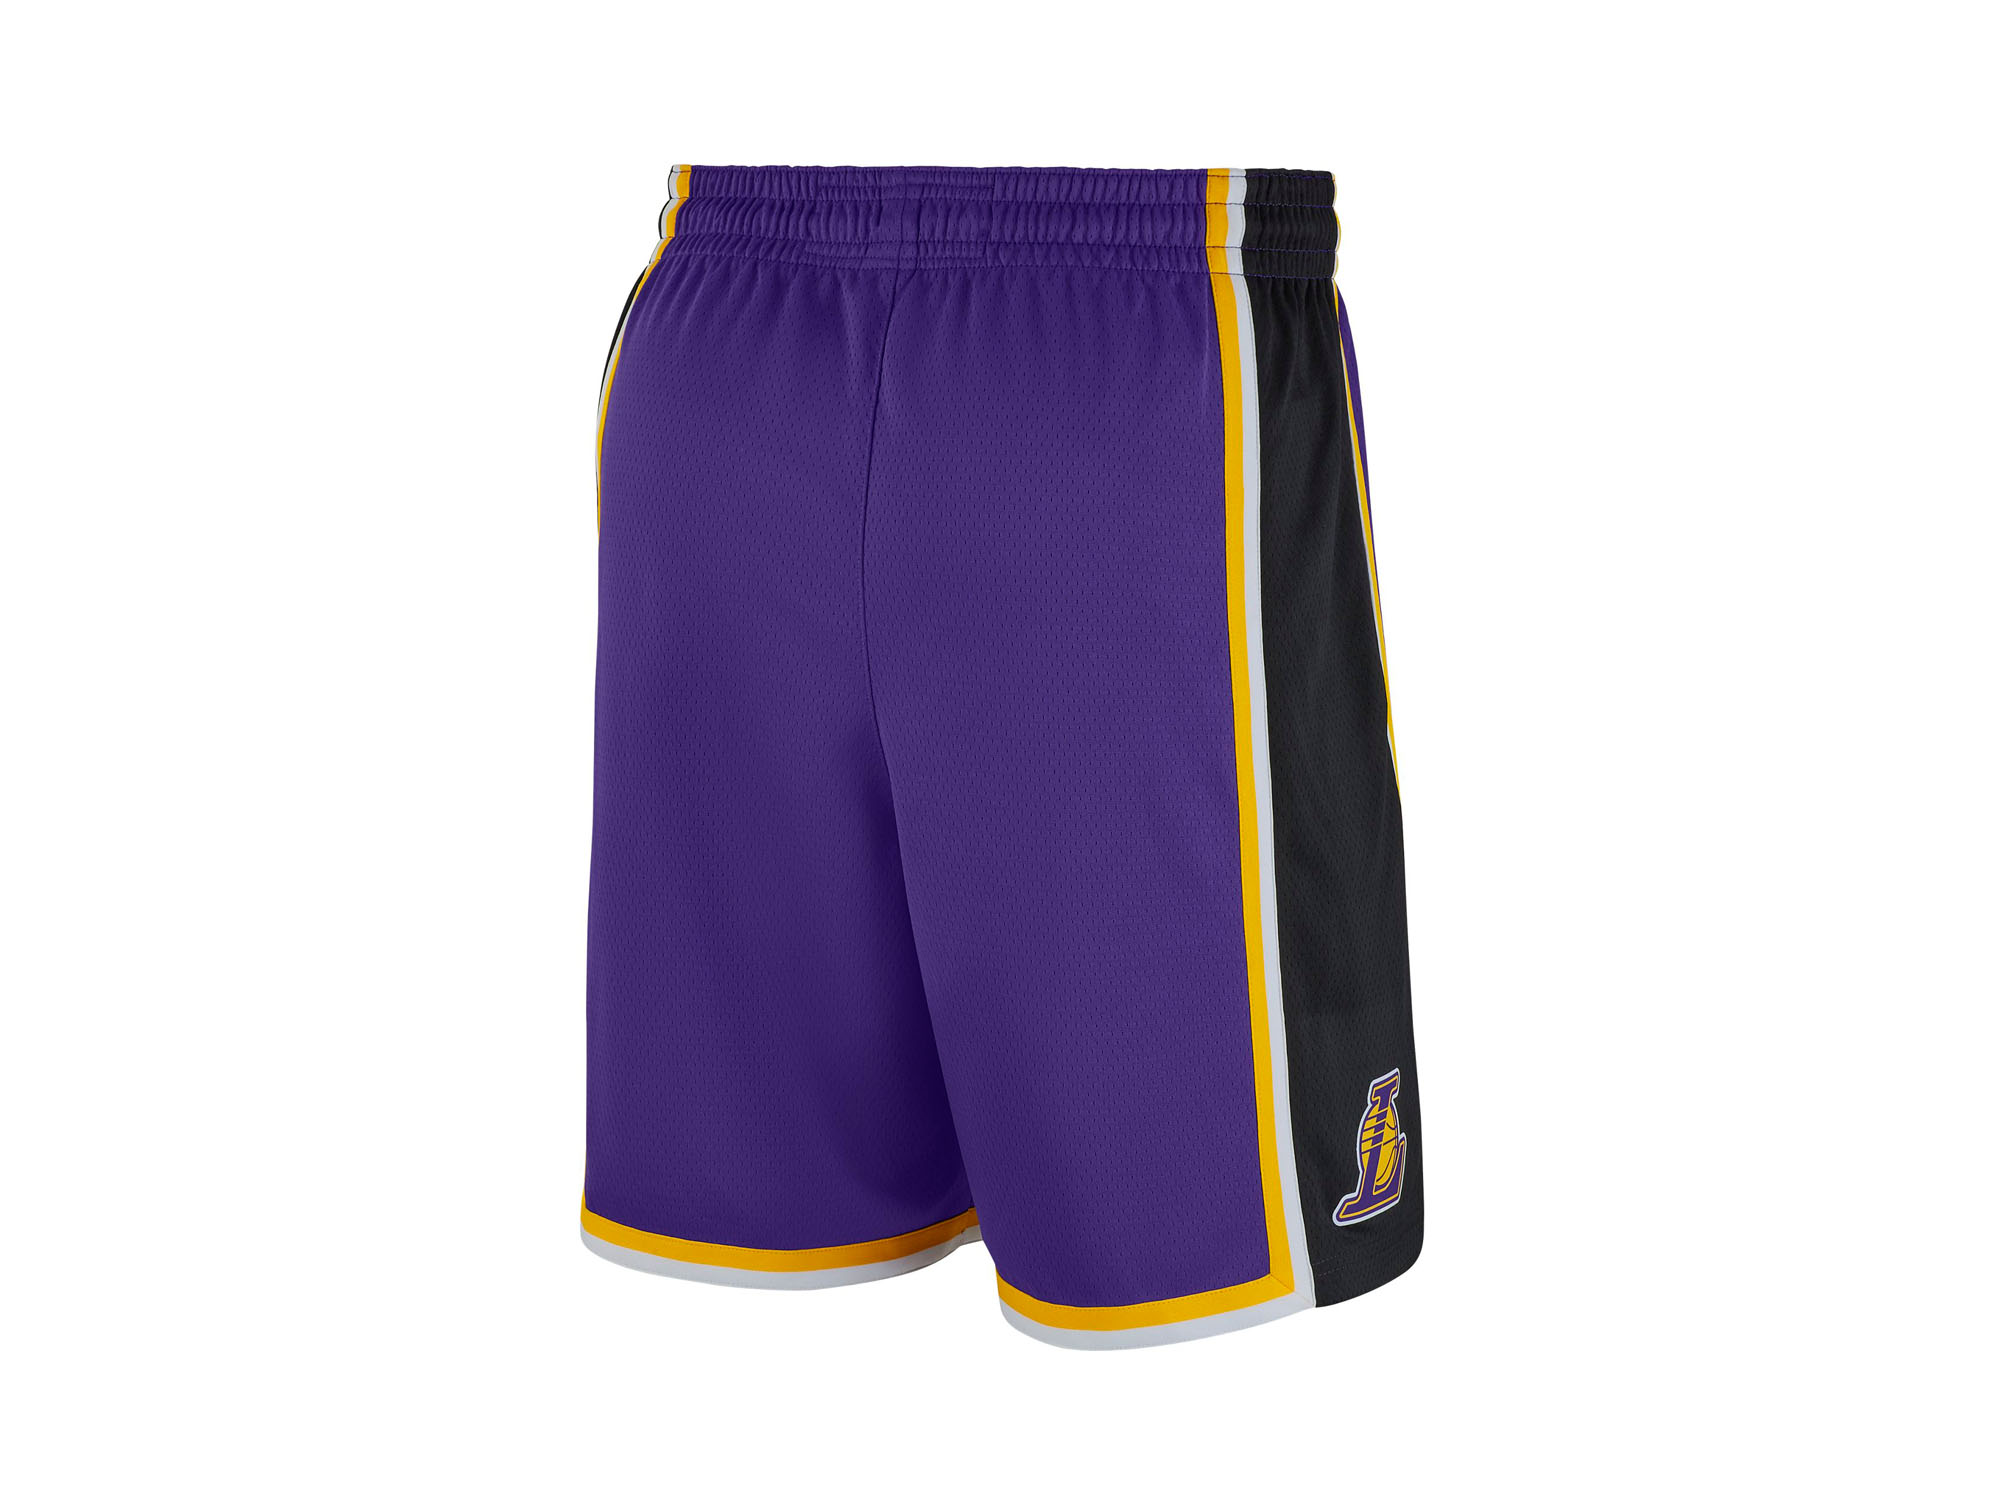 Jordan Los Angeles Lakers NBA Statement Edition Swingman Shorts 2020